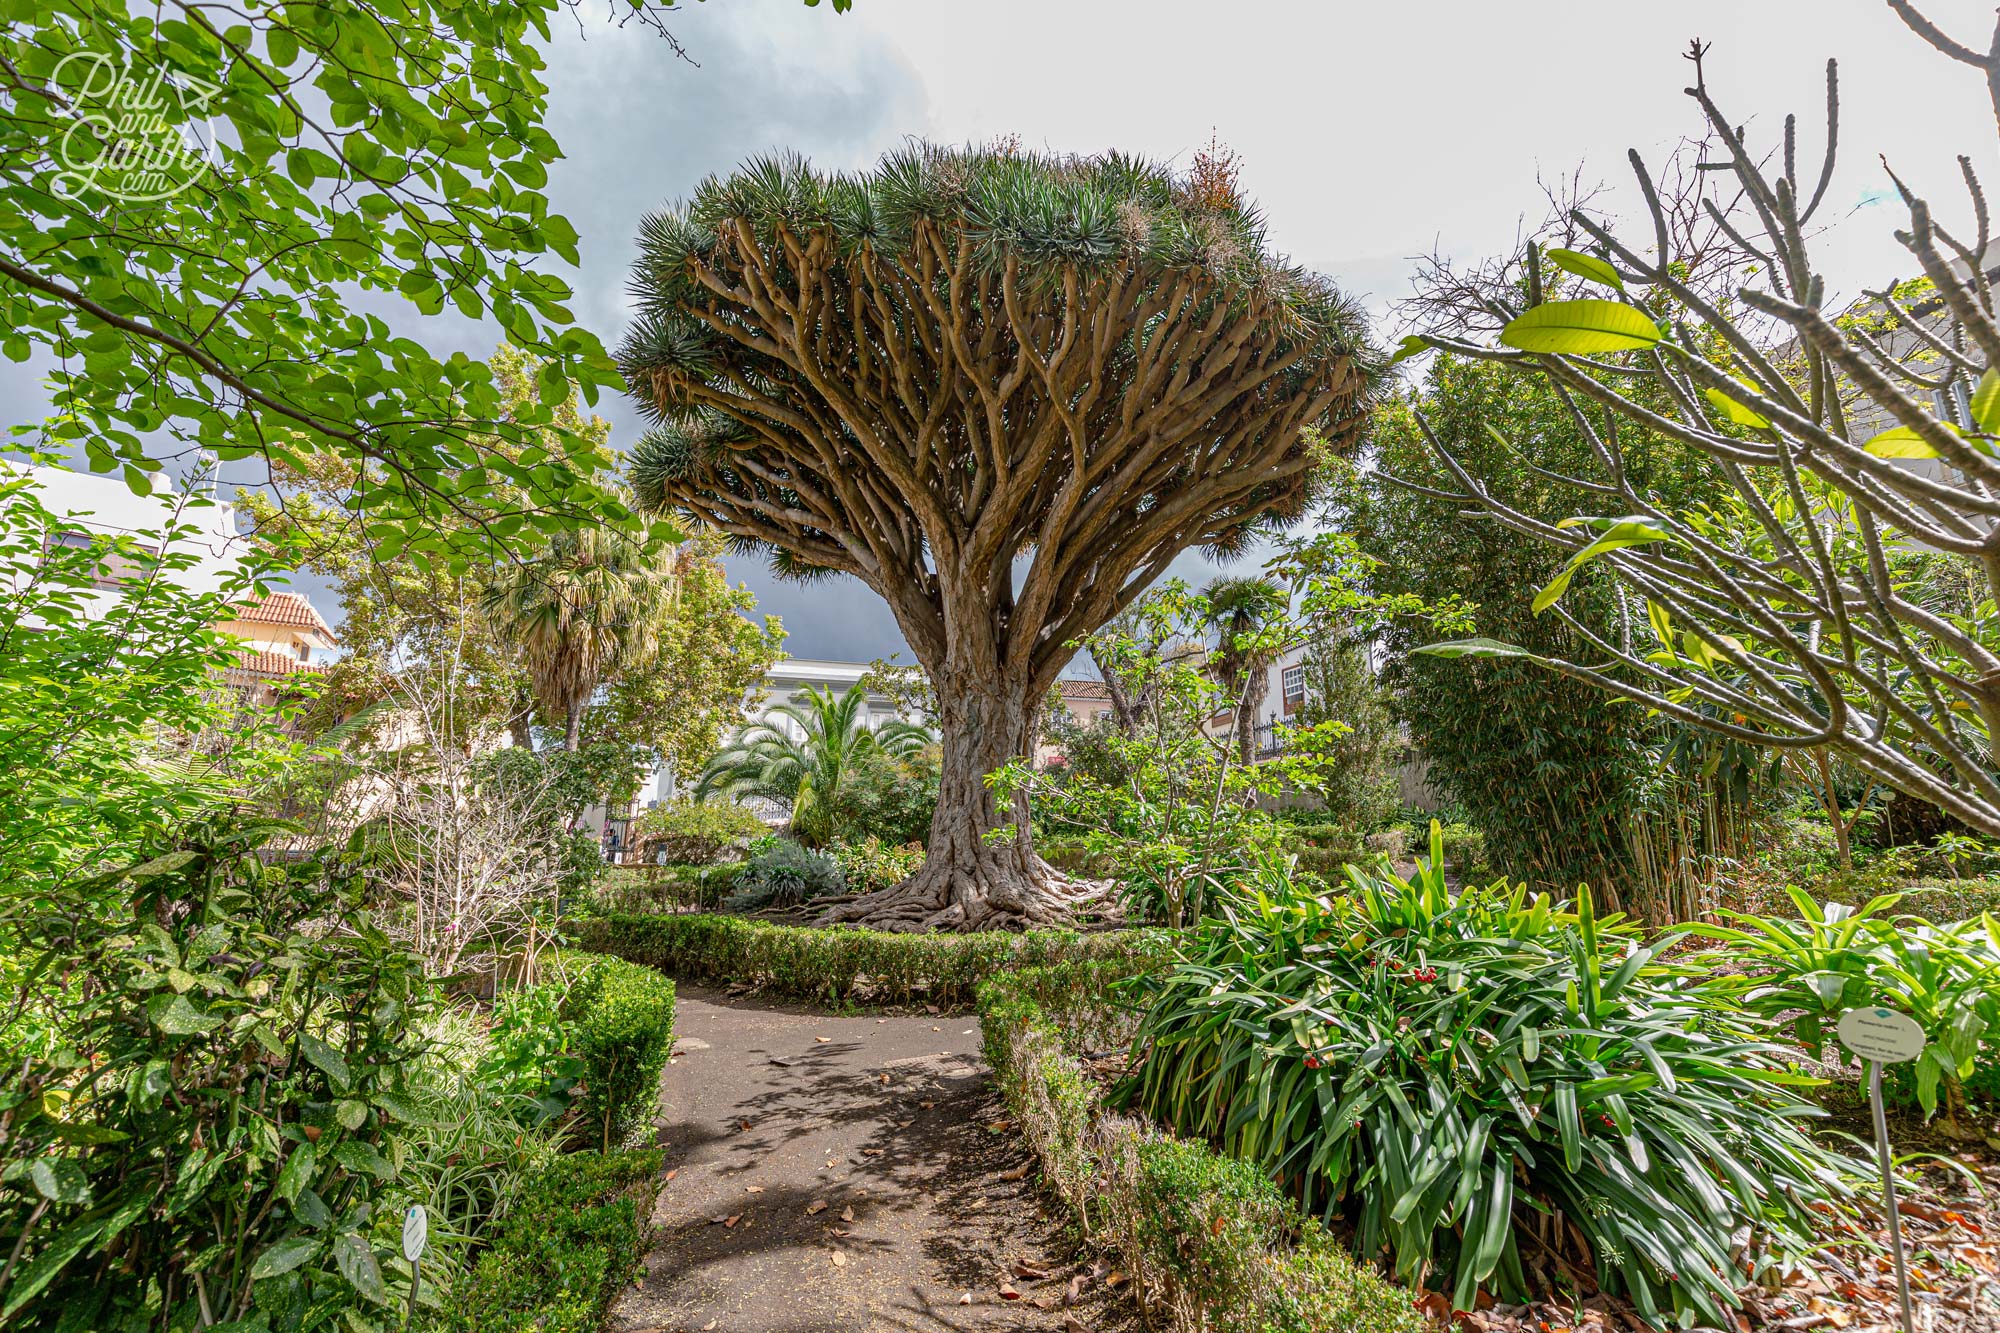 Opposite Jardín Victoria is a small Botanical Garden, well worth a look around